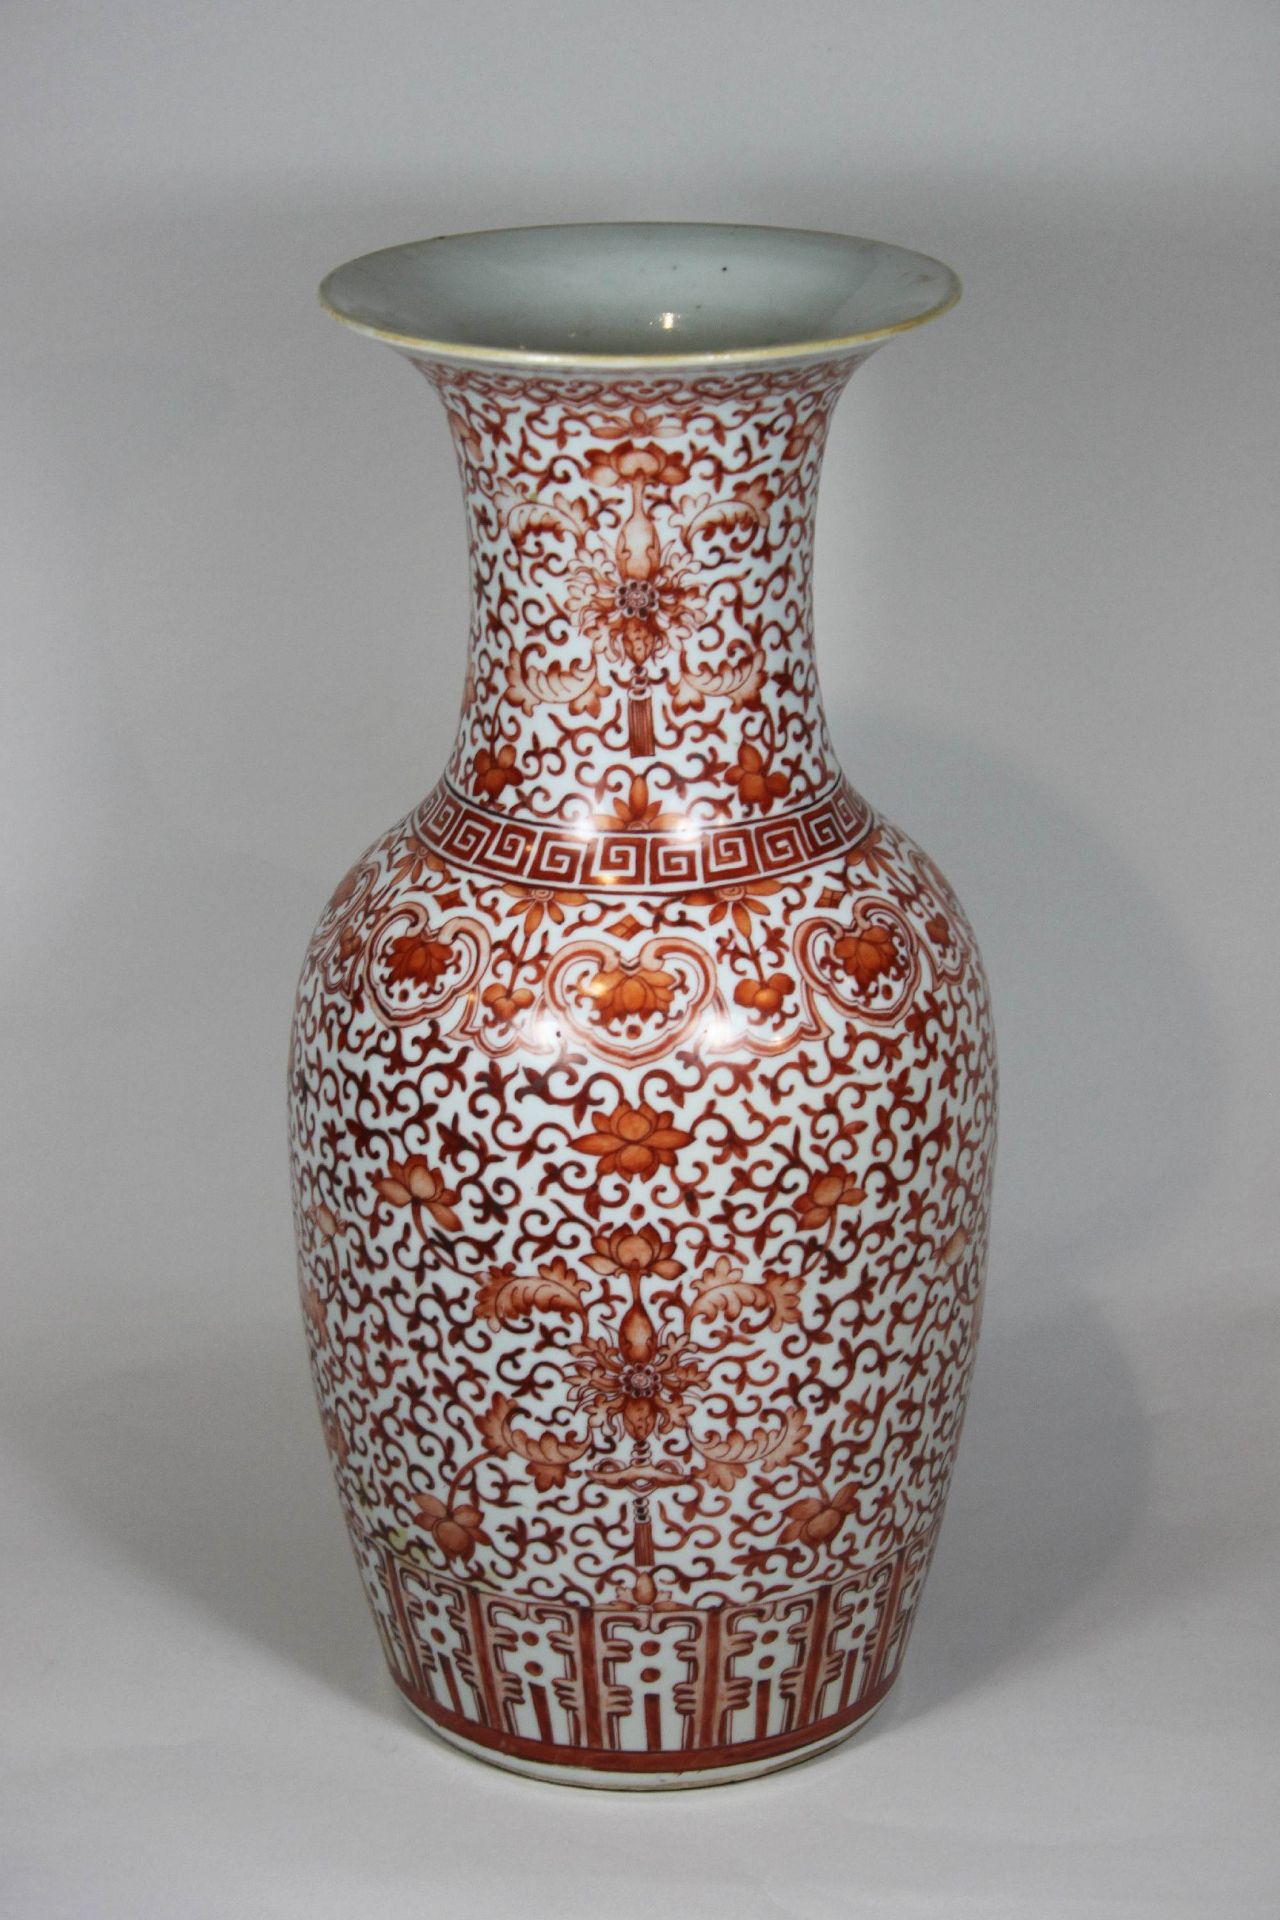 Vase, China, Familie Rose, Porzellan, rot bemalt über Glasur, Ranken und Blumendekor, türkiser Bo